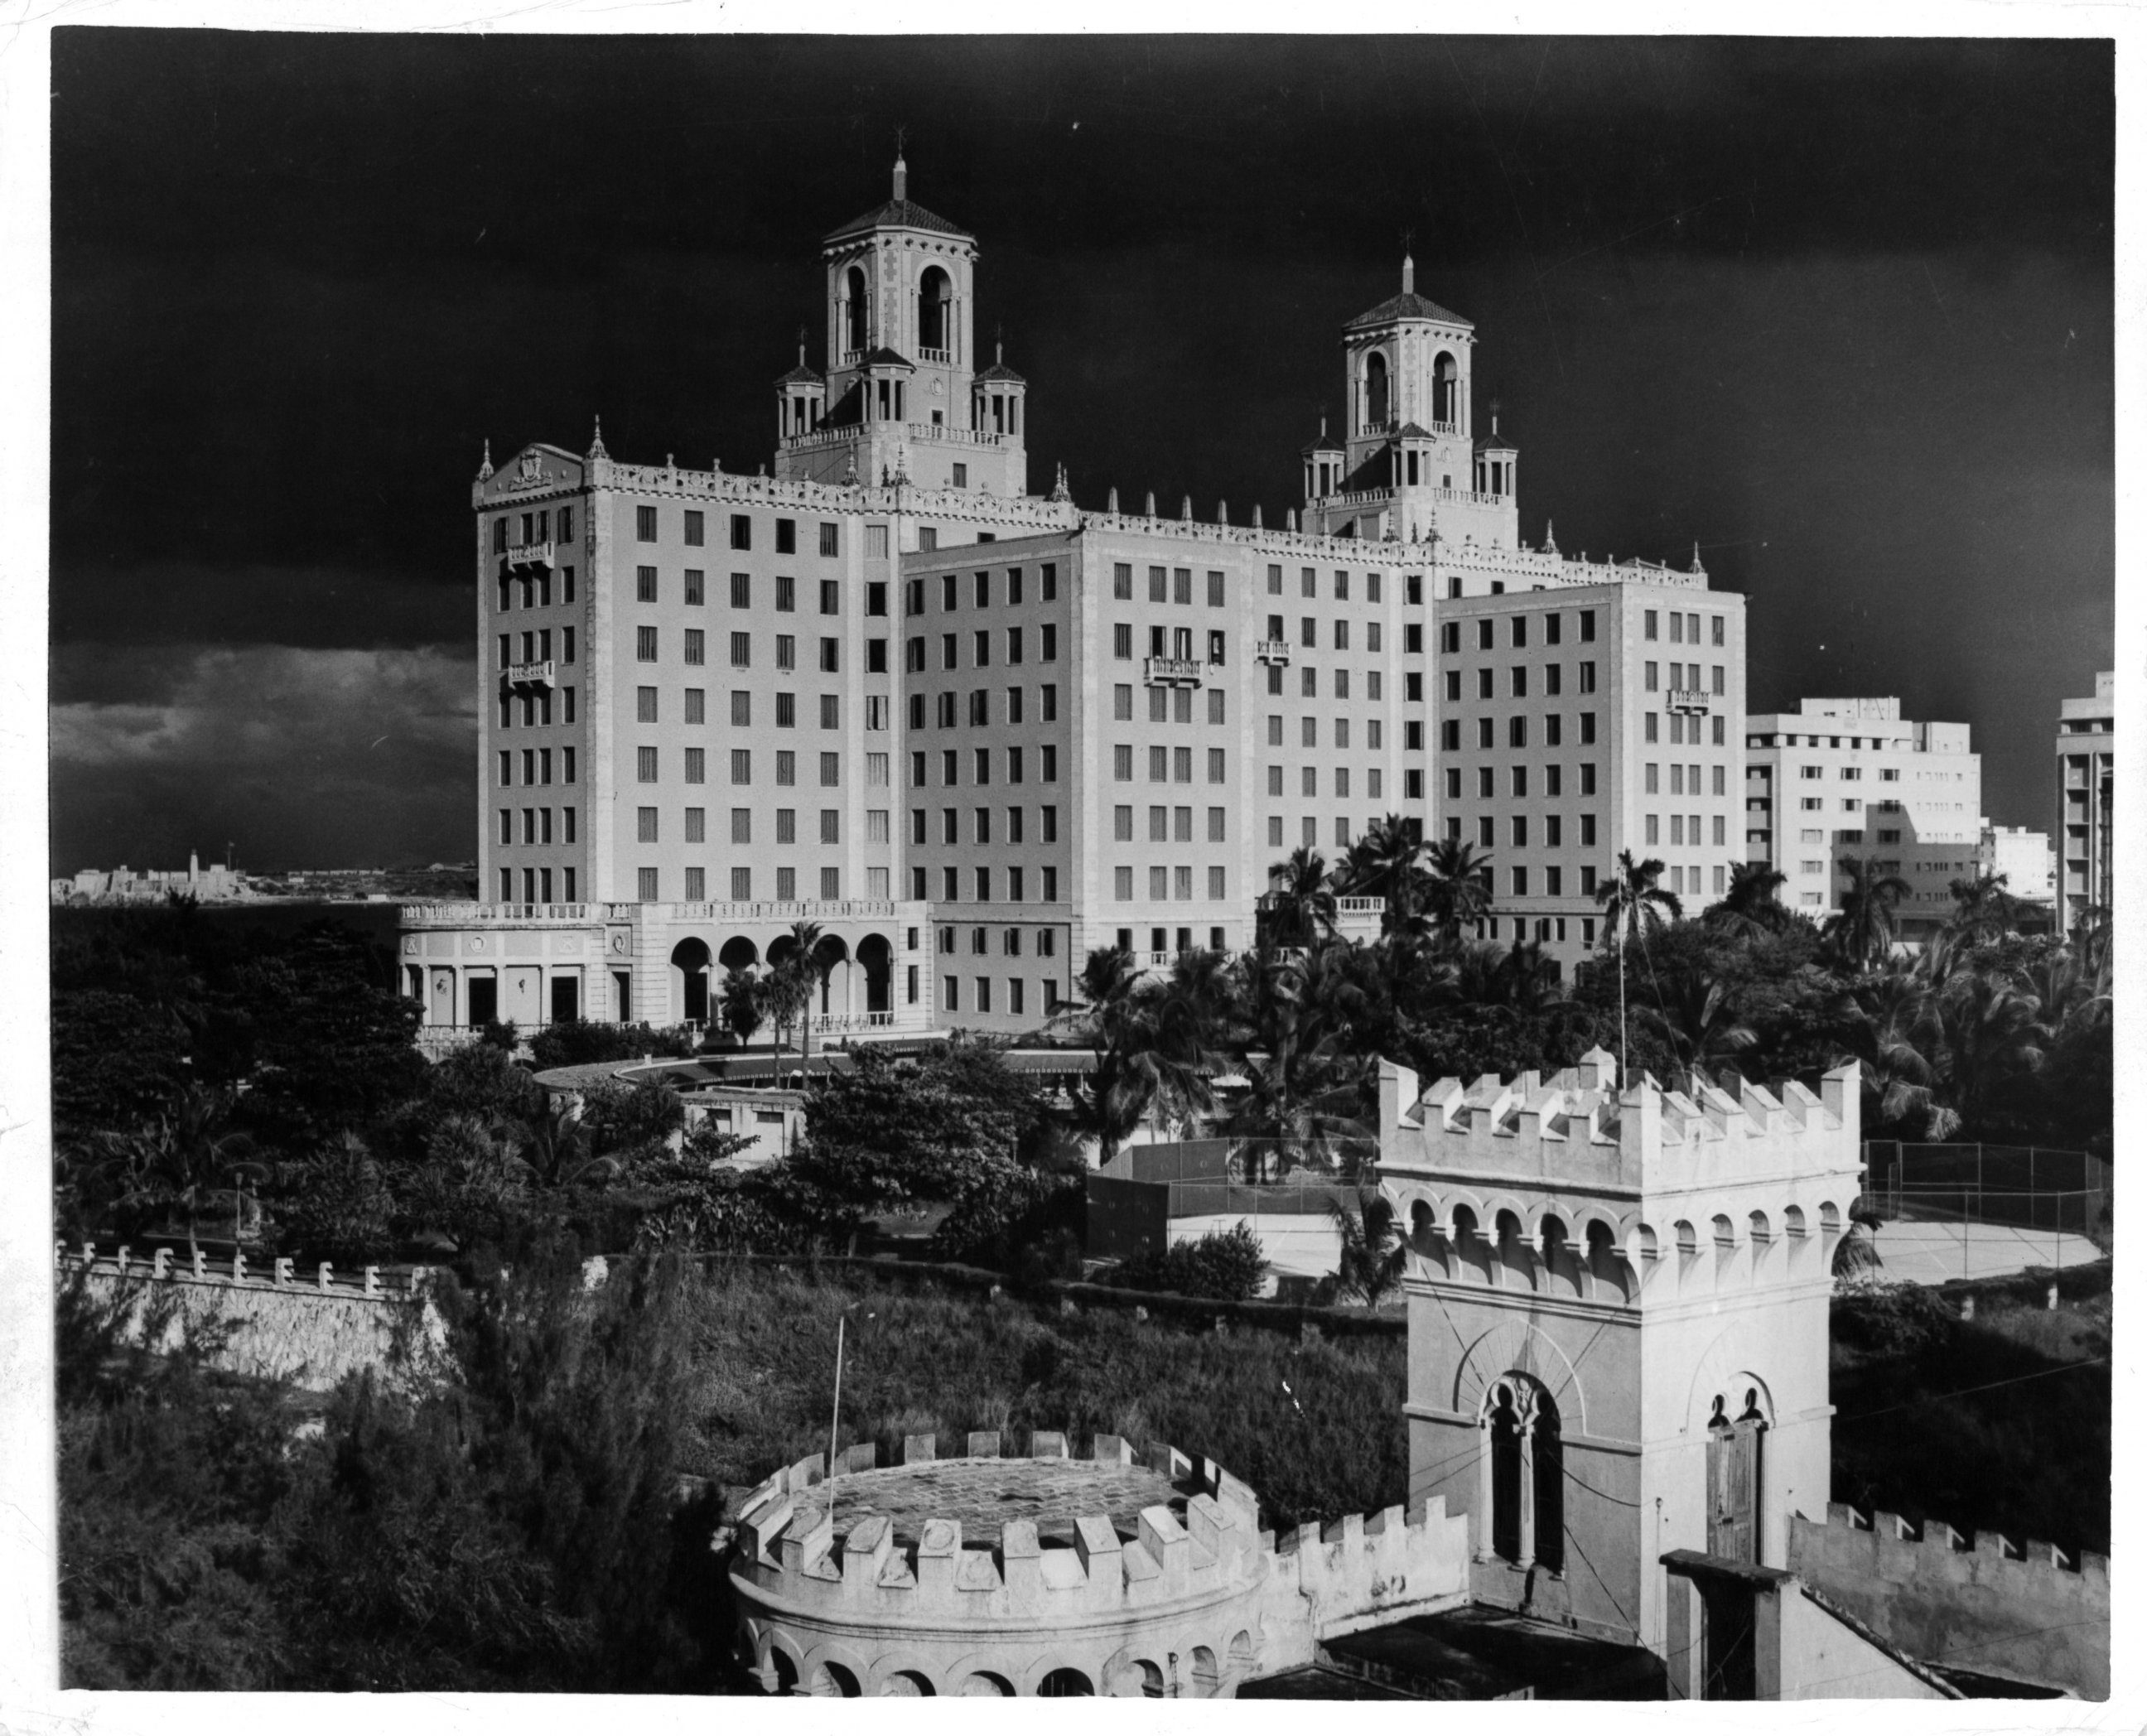 PHOTO: View of the Hotel Nacional de Cuba from January 1950, in Havana, Cuba.